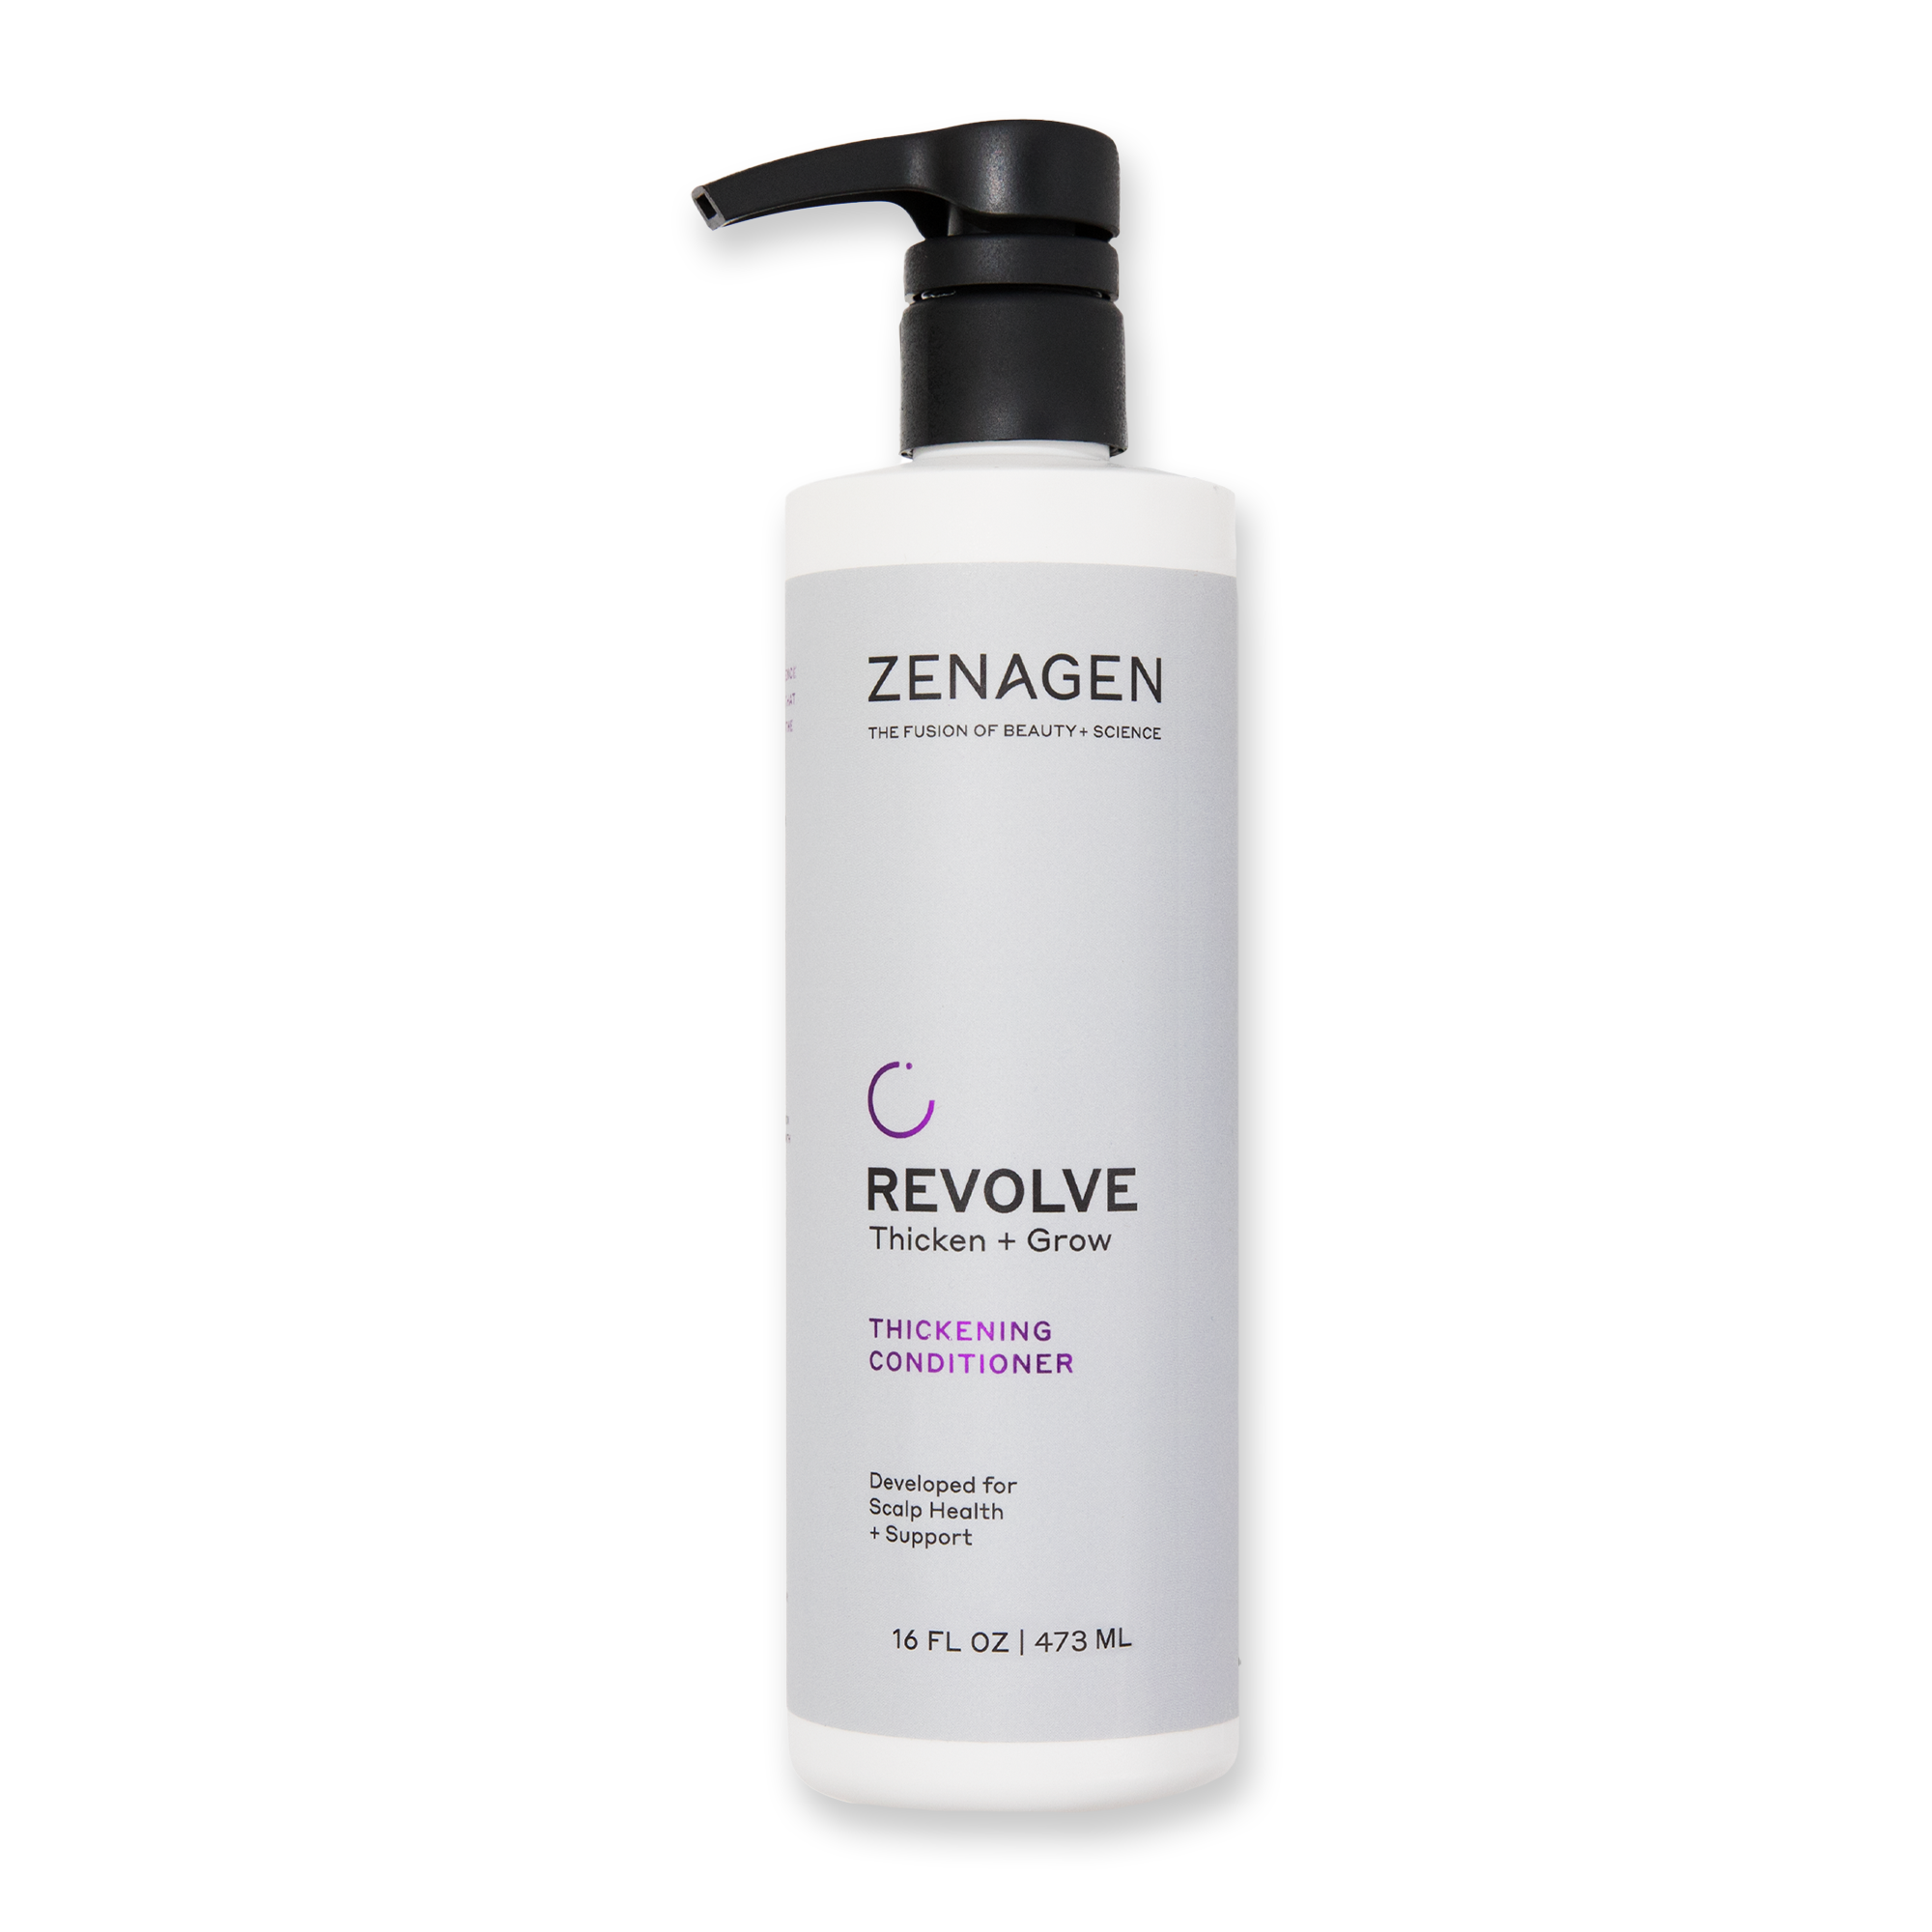 Zenagen Revolve Men's Hair Loss Shampoo and Conditioner Duo 16oz / 16OZ